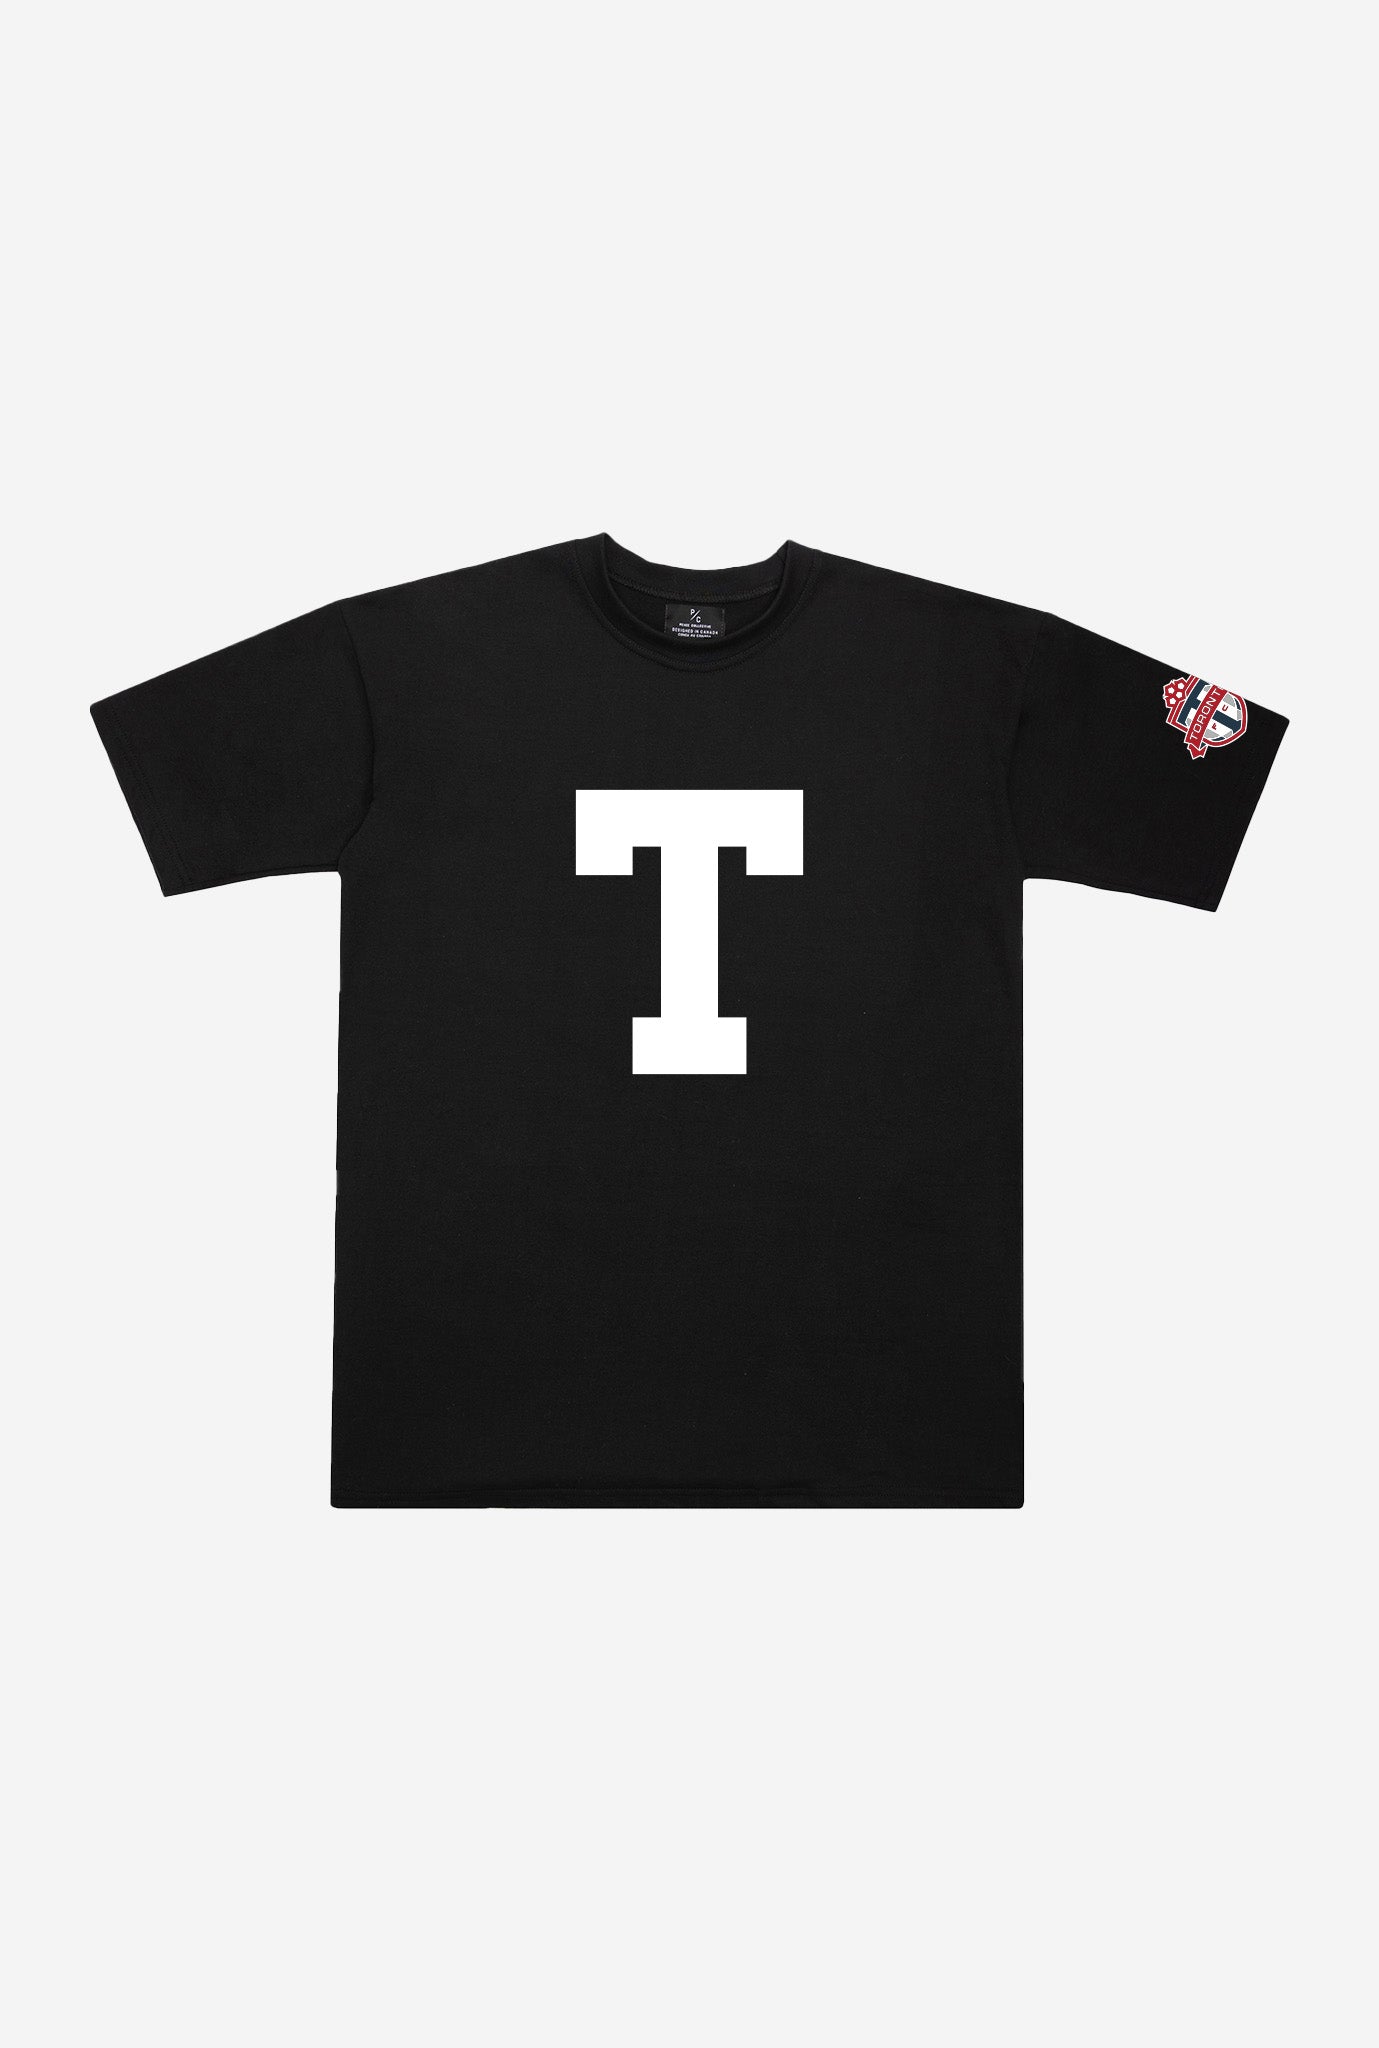 Toronto FC "T" Heavyweight T-Shirt - Black